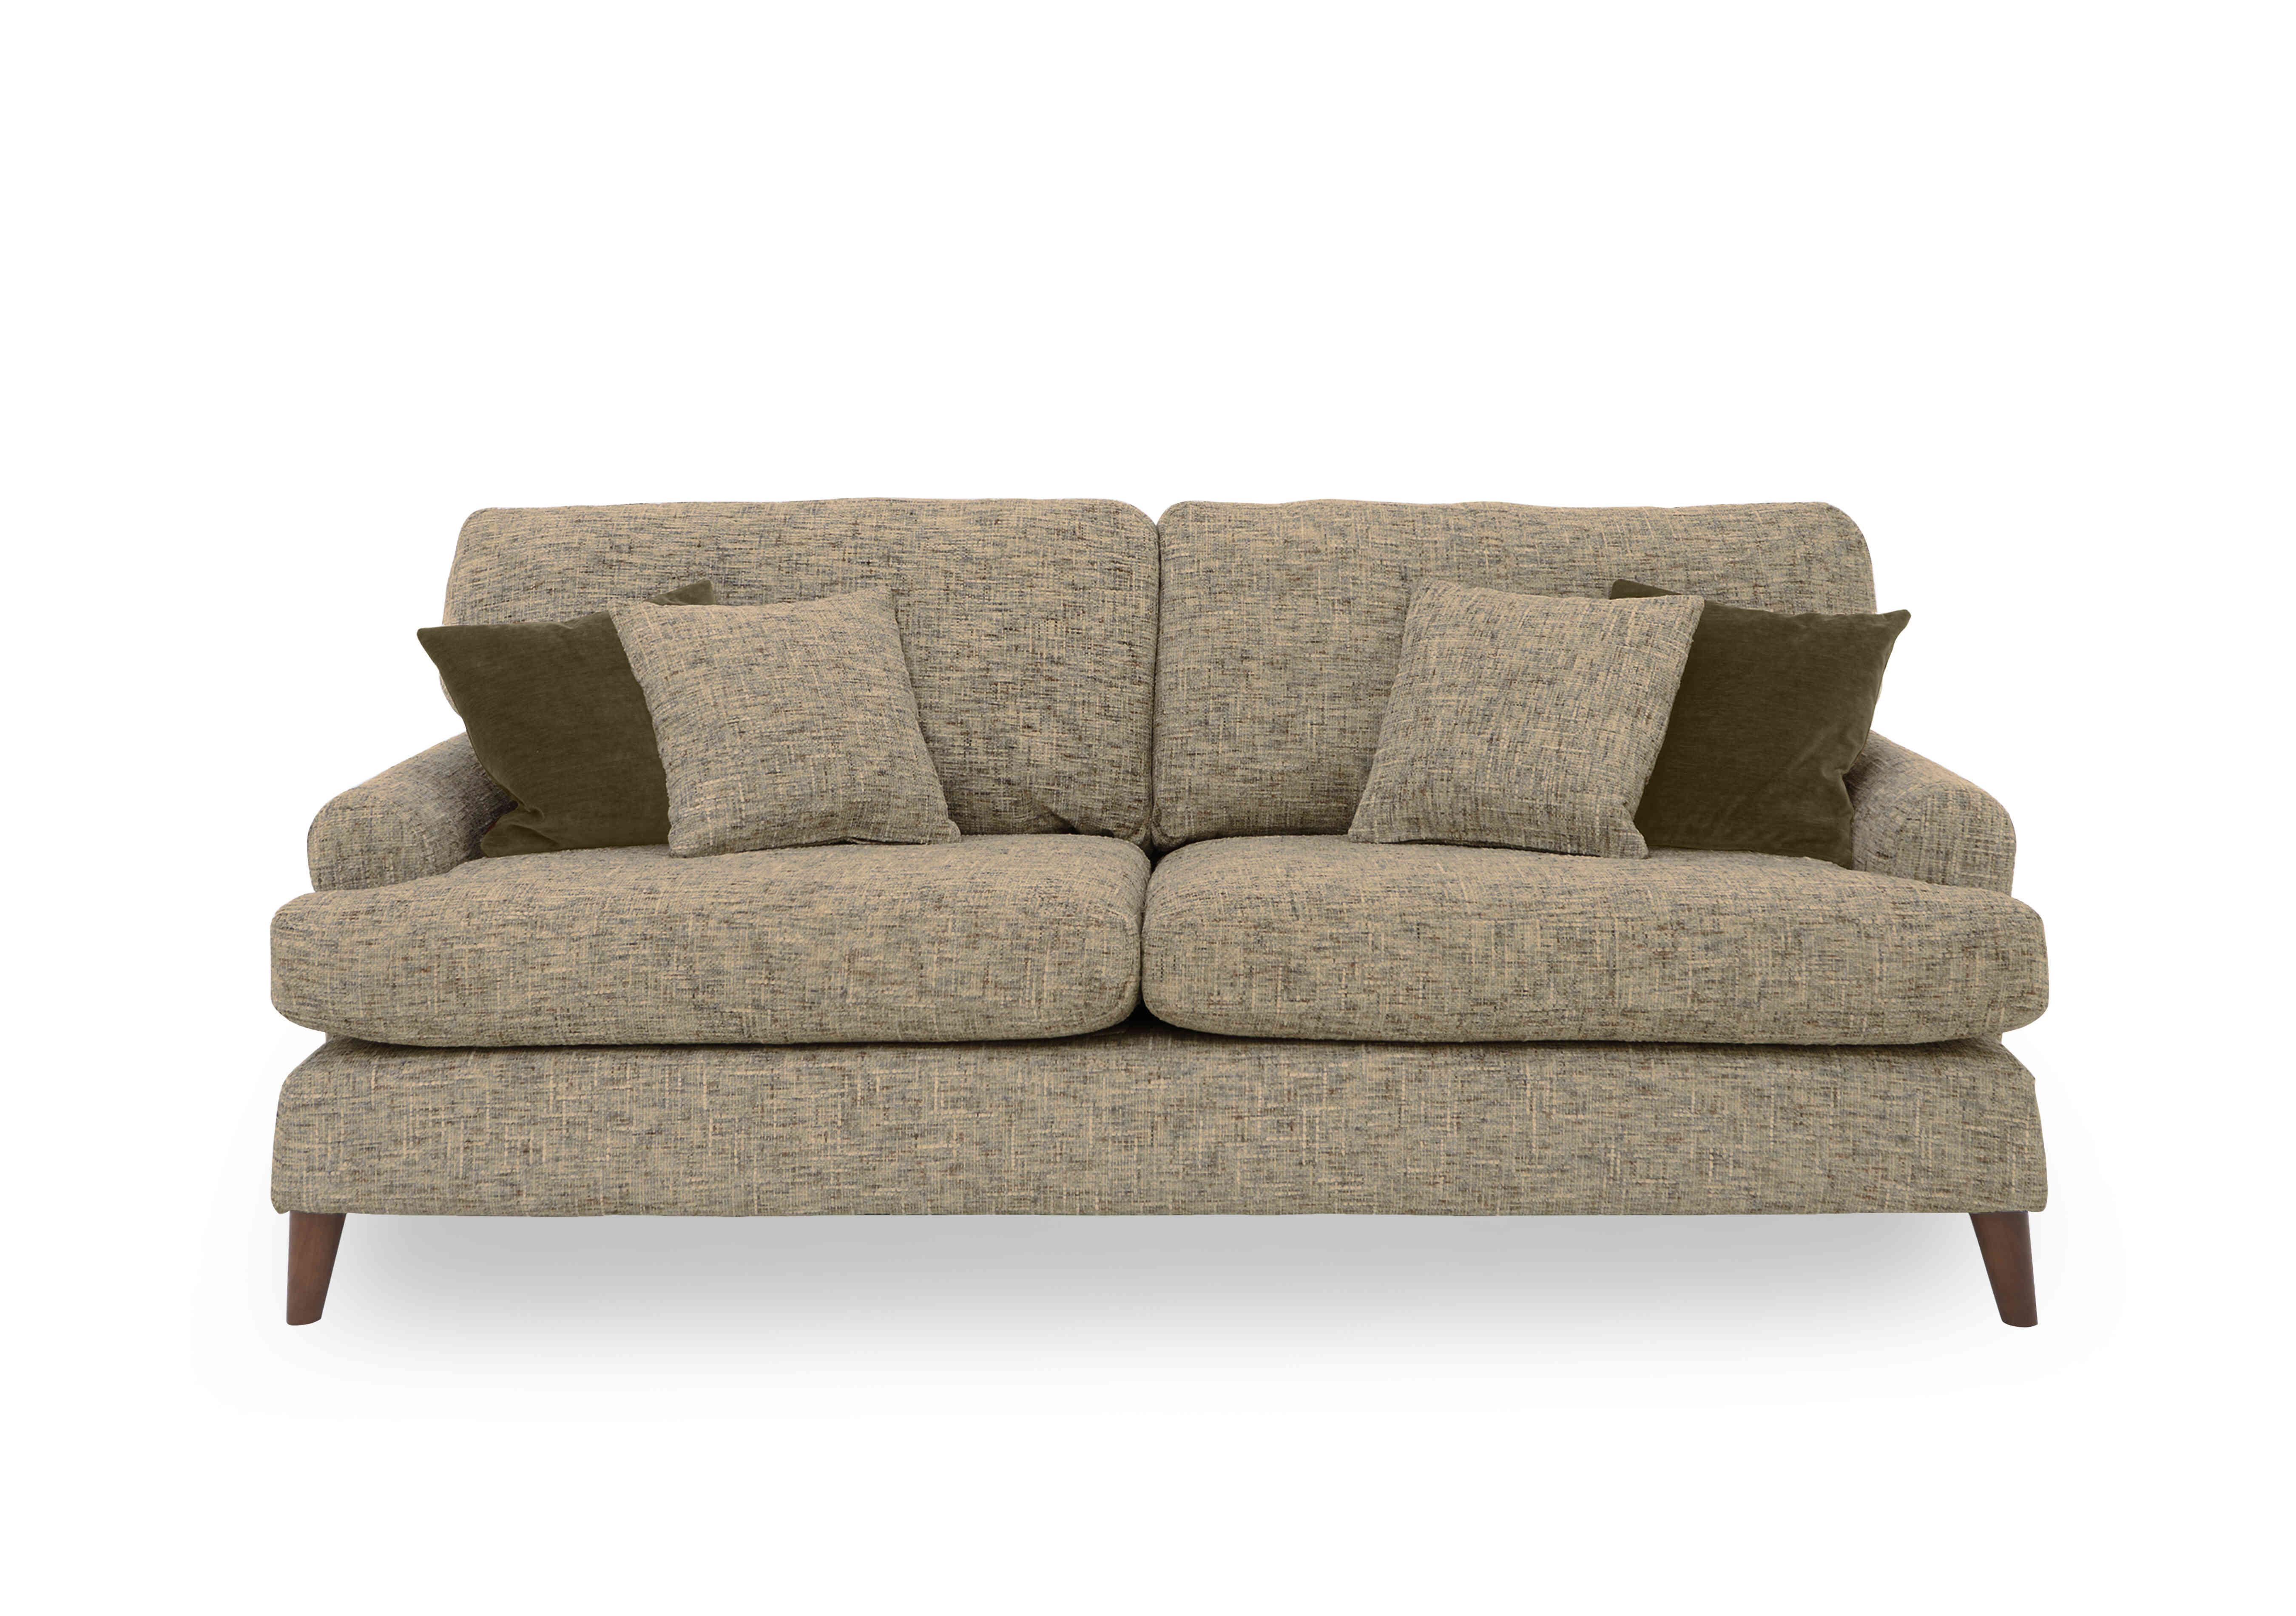 Jackson 4 Seater Fabric Sofa in Dijon on Furniture Village